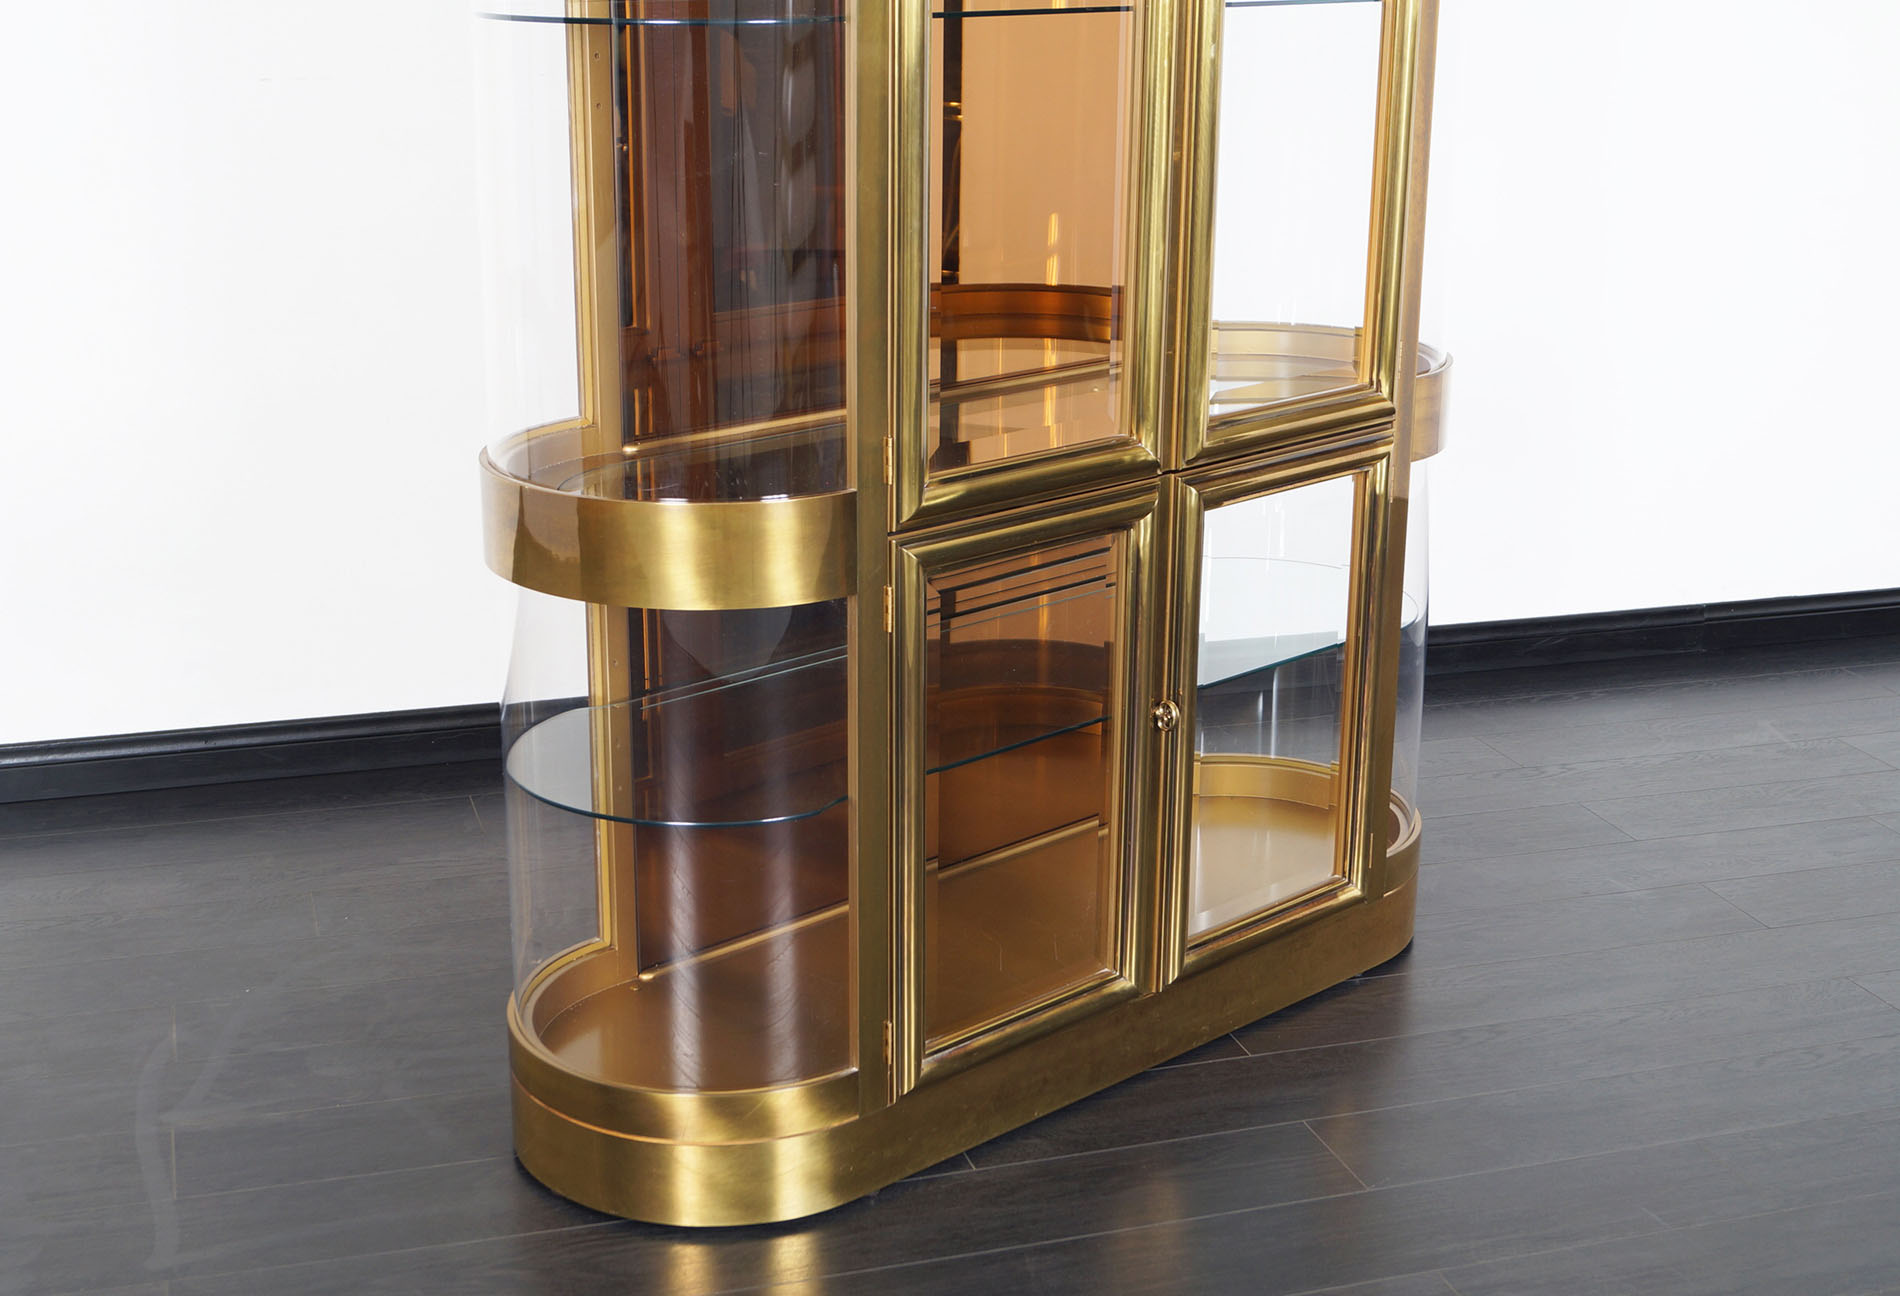 Exceptional Brass Vitrine Cabinet by Mastercraft